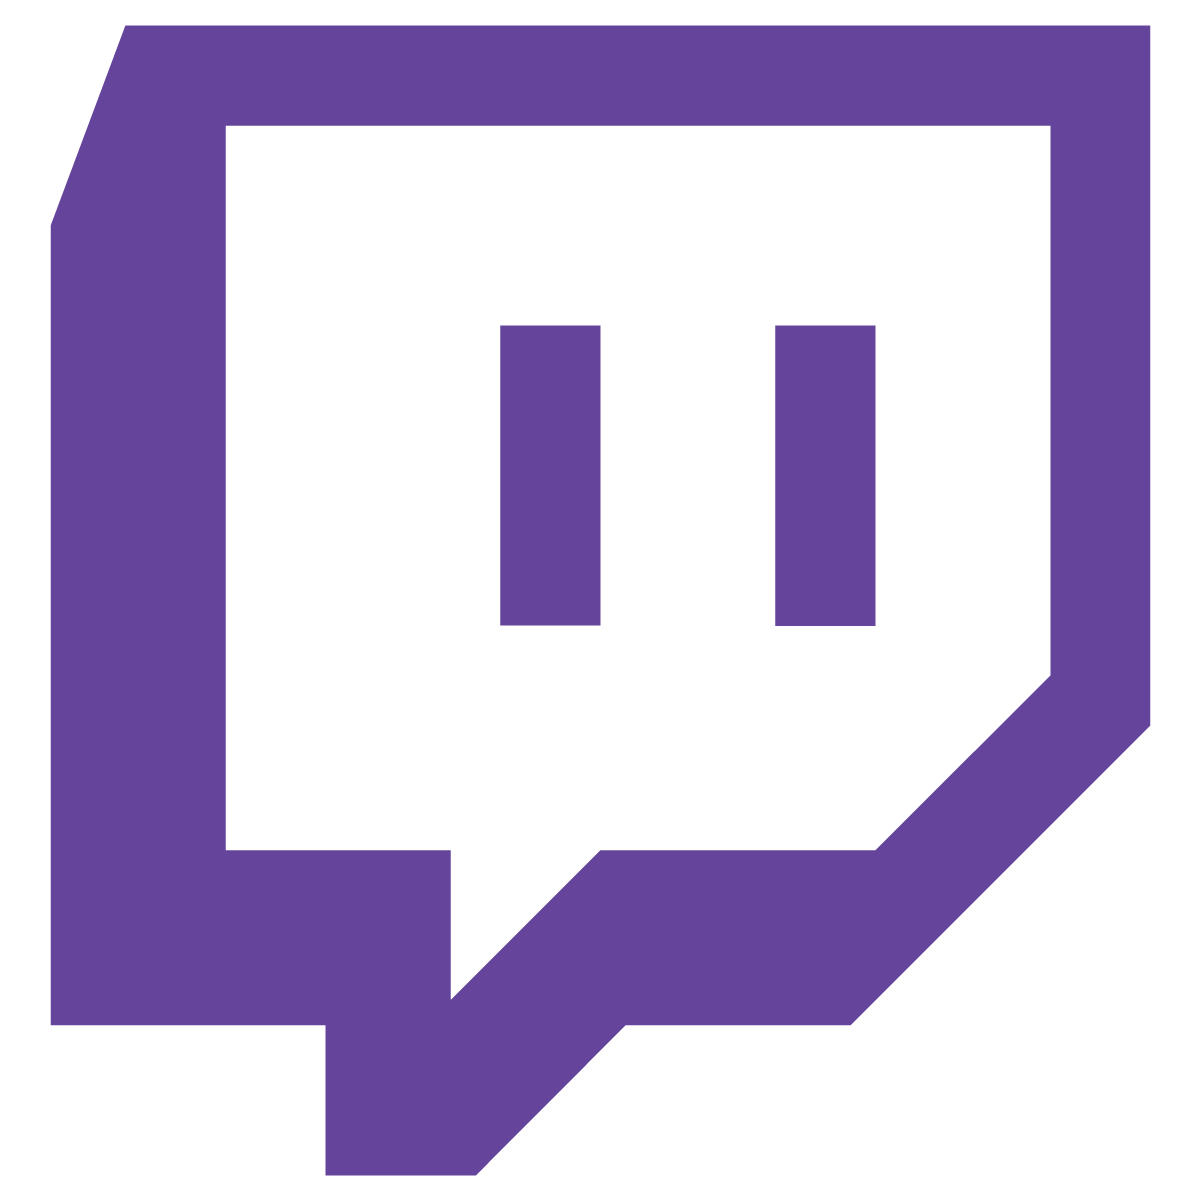 Twitch Logo PNG HD Image